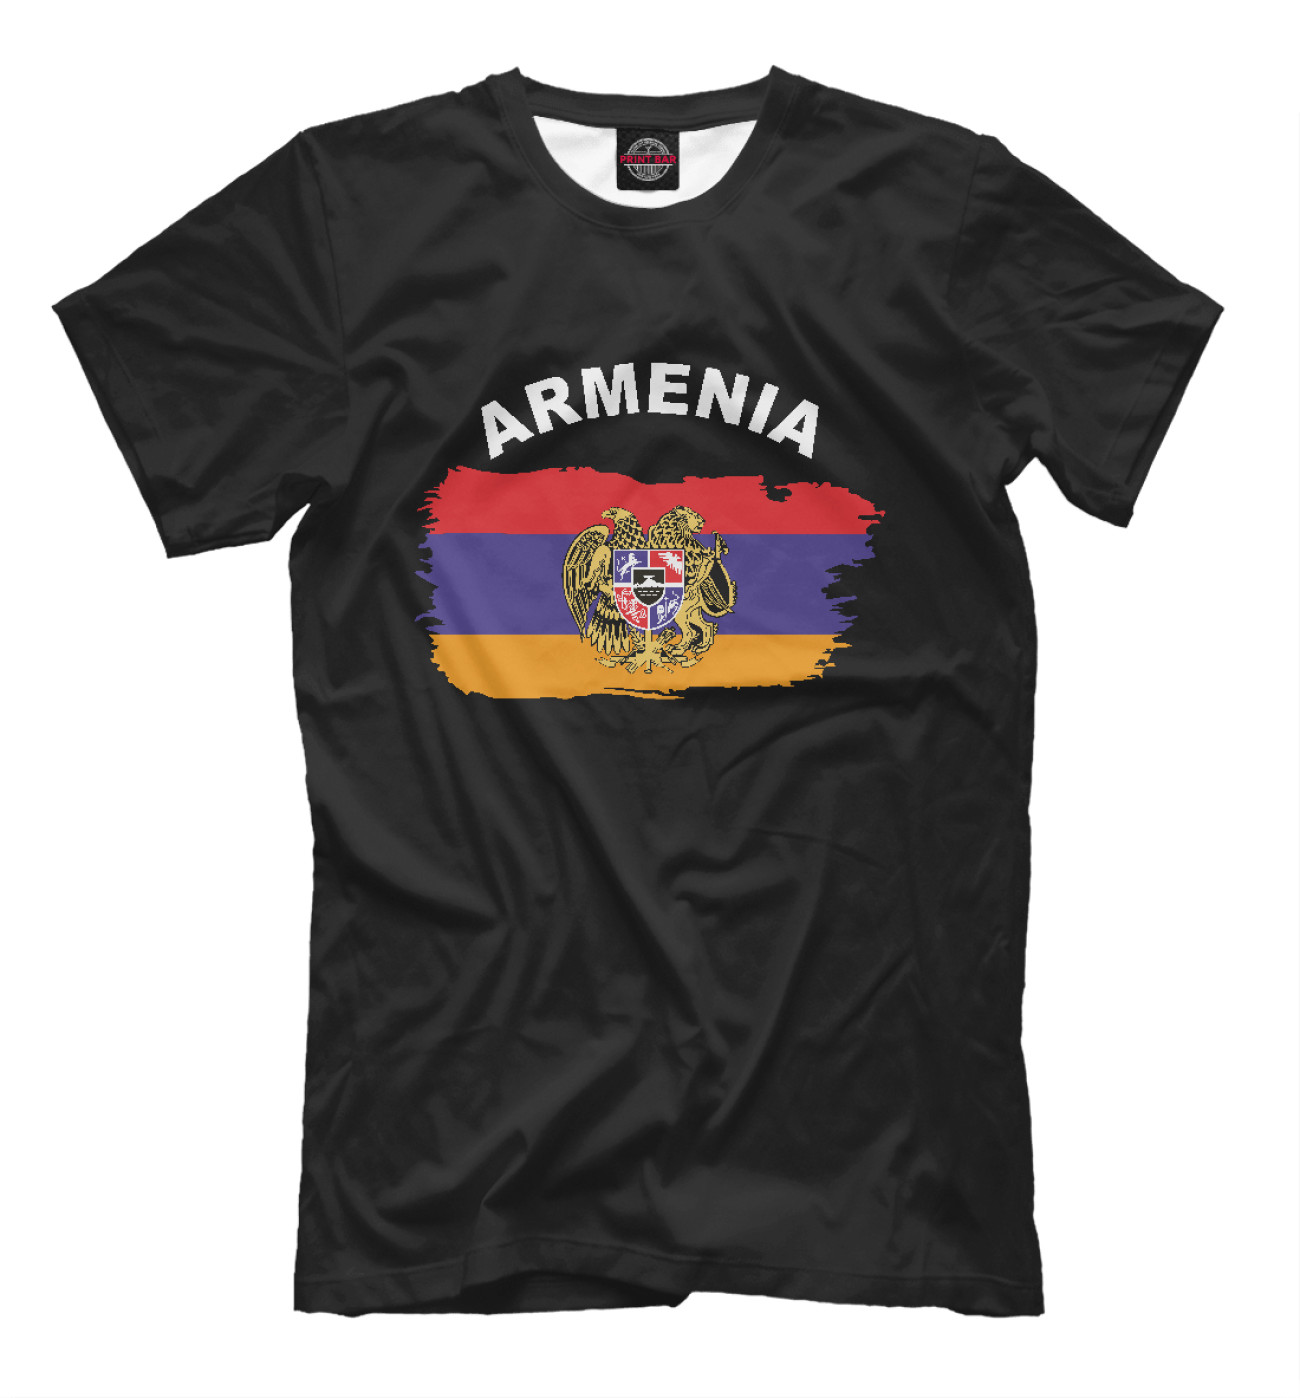 Мужская Футболка Armenia, артикул: AMN-549606-fut-2